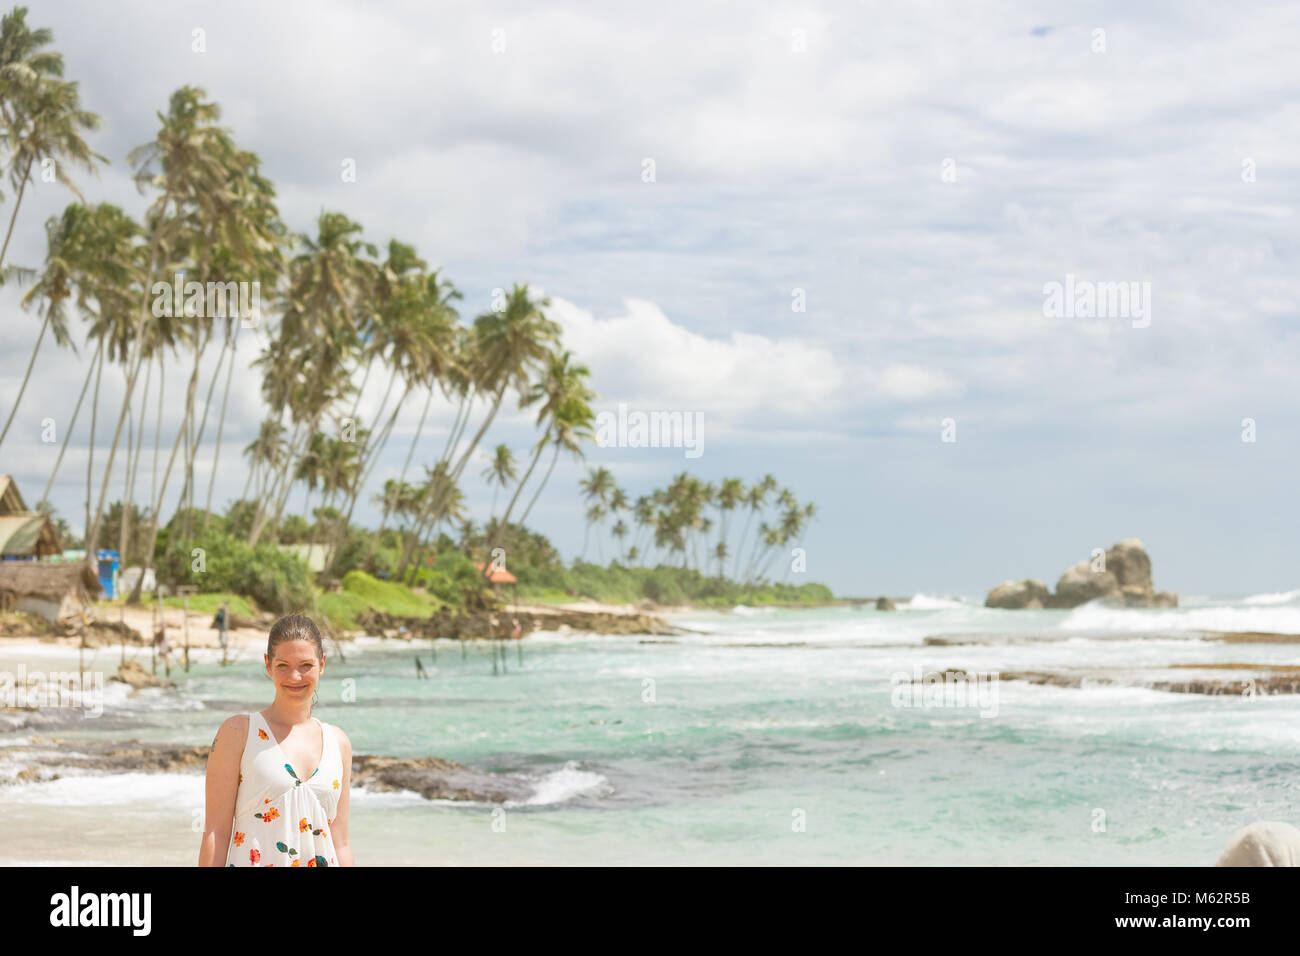 Koggala Beach, Sri Lanka, Asie - Portrait d'une femme à Koggala Beach Banque D'Images